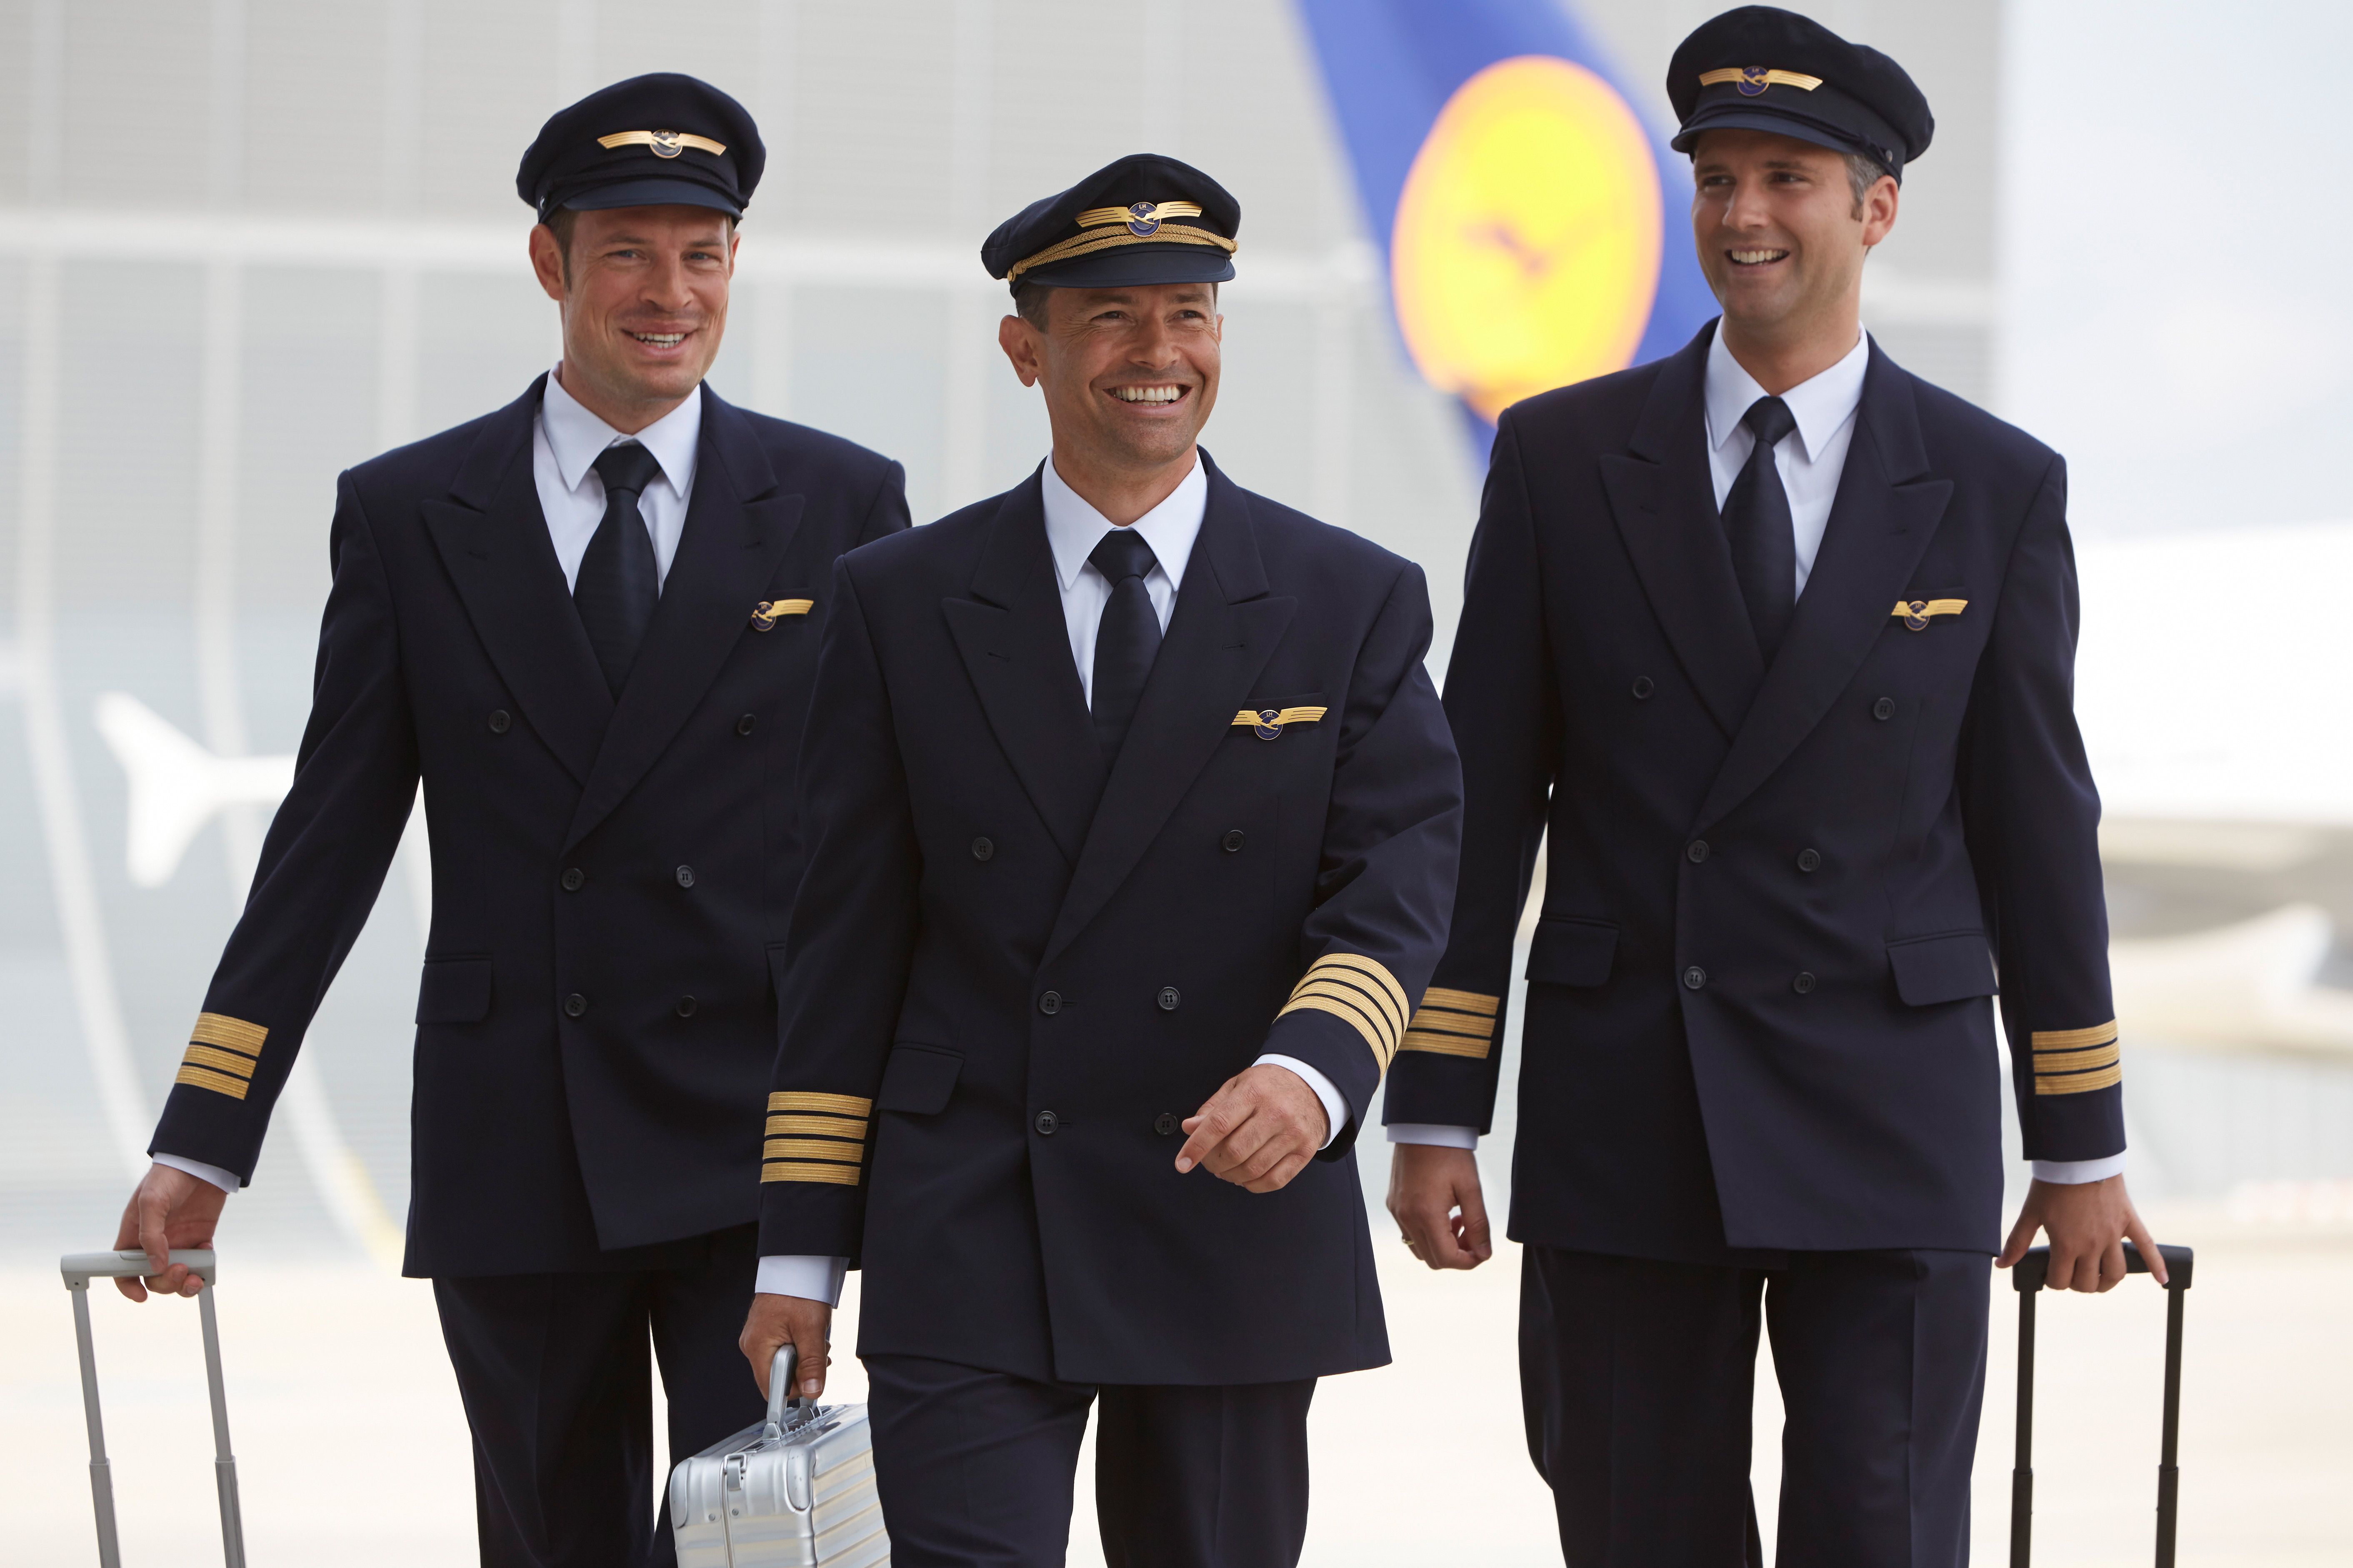 Multiple Lufthansa pilots walking together..